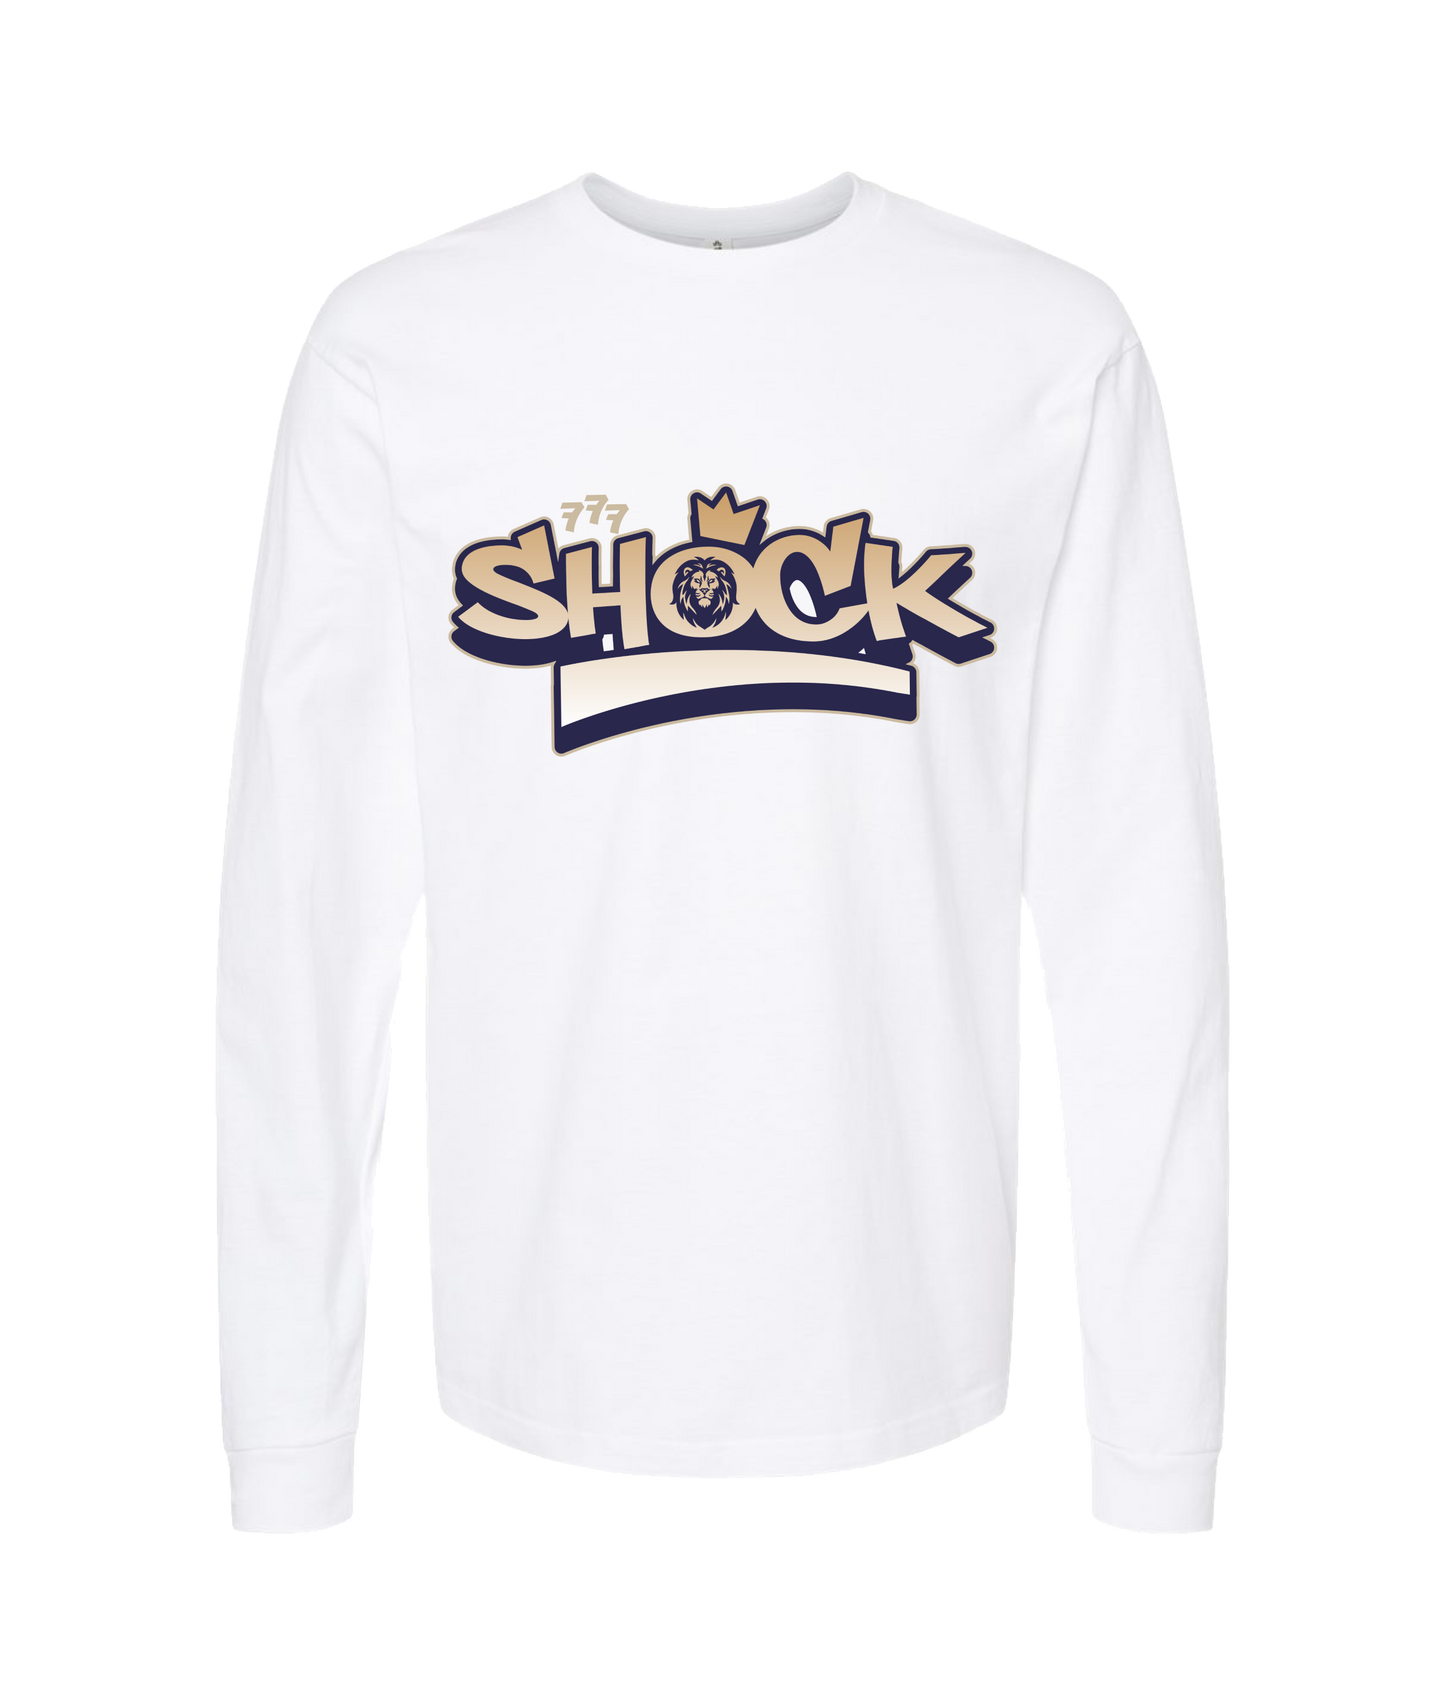 Shock - SHOCK - White Long Sleeve T